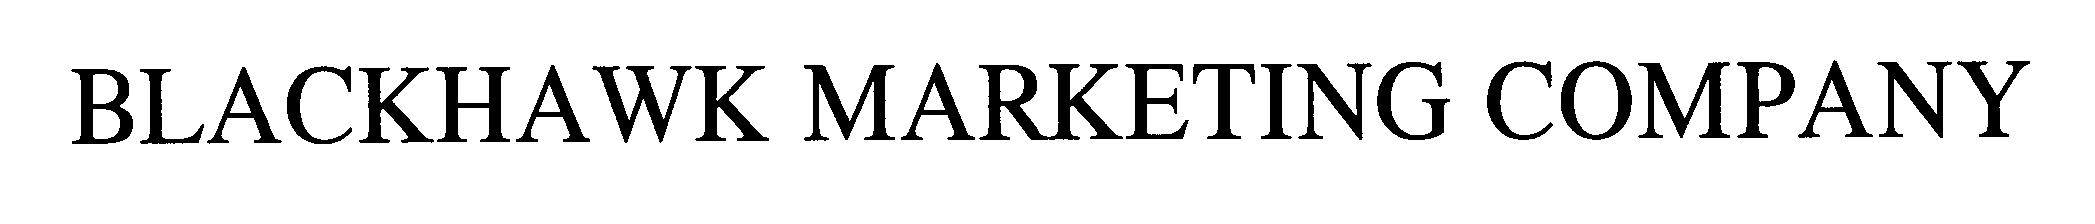  BLACKHAWK MARKETING COMPANY